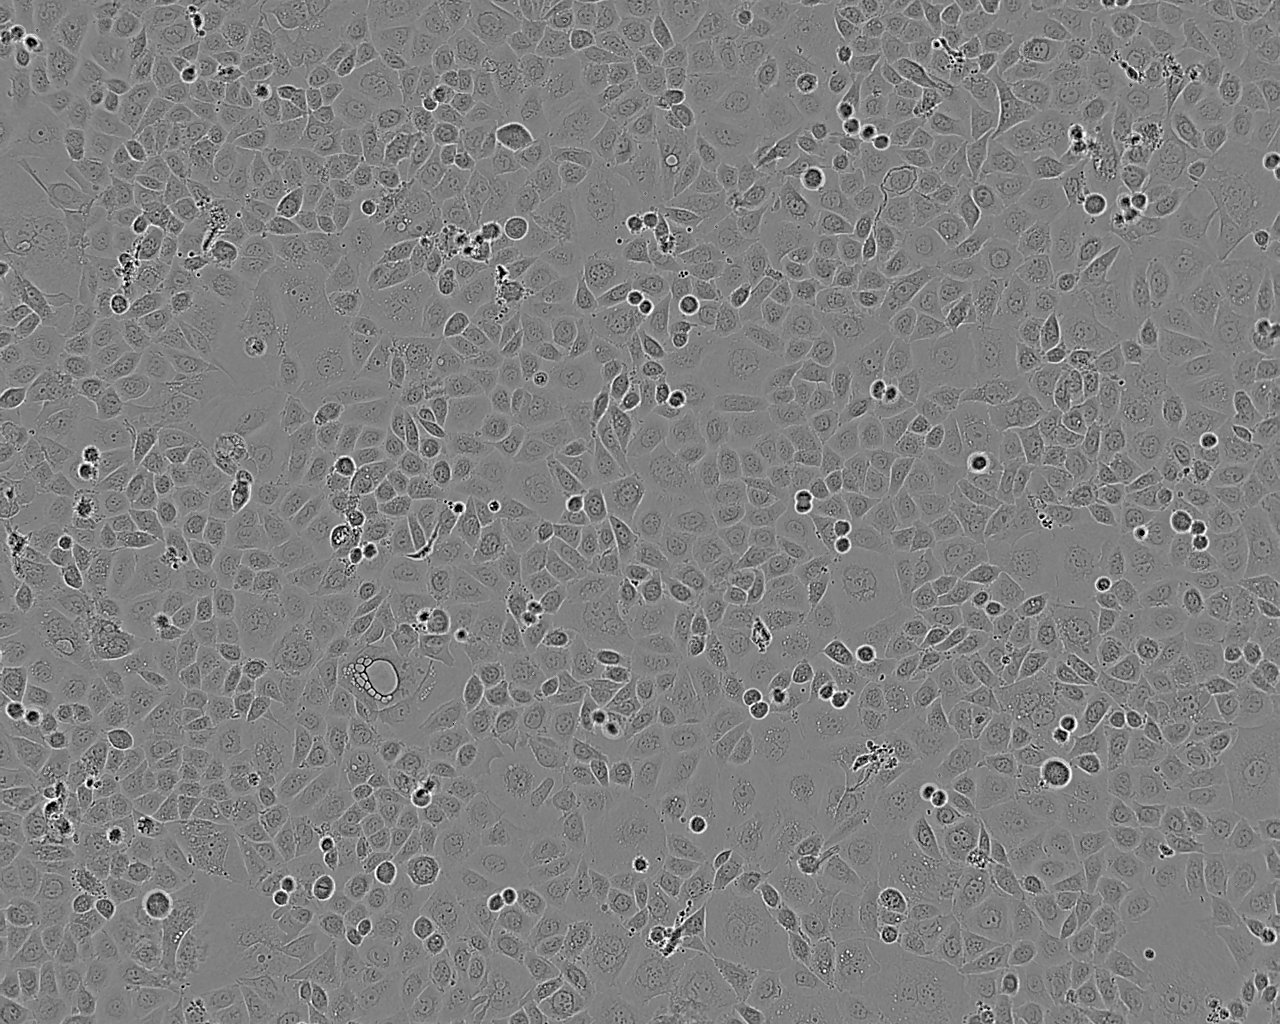 HEp-2 Cells|人喉表皮样癌细胞系,HEp-2 Cells